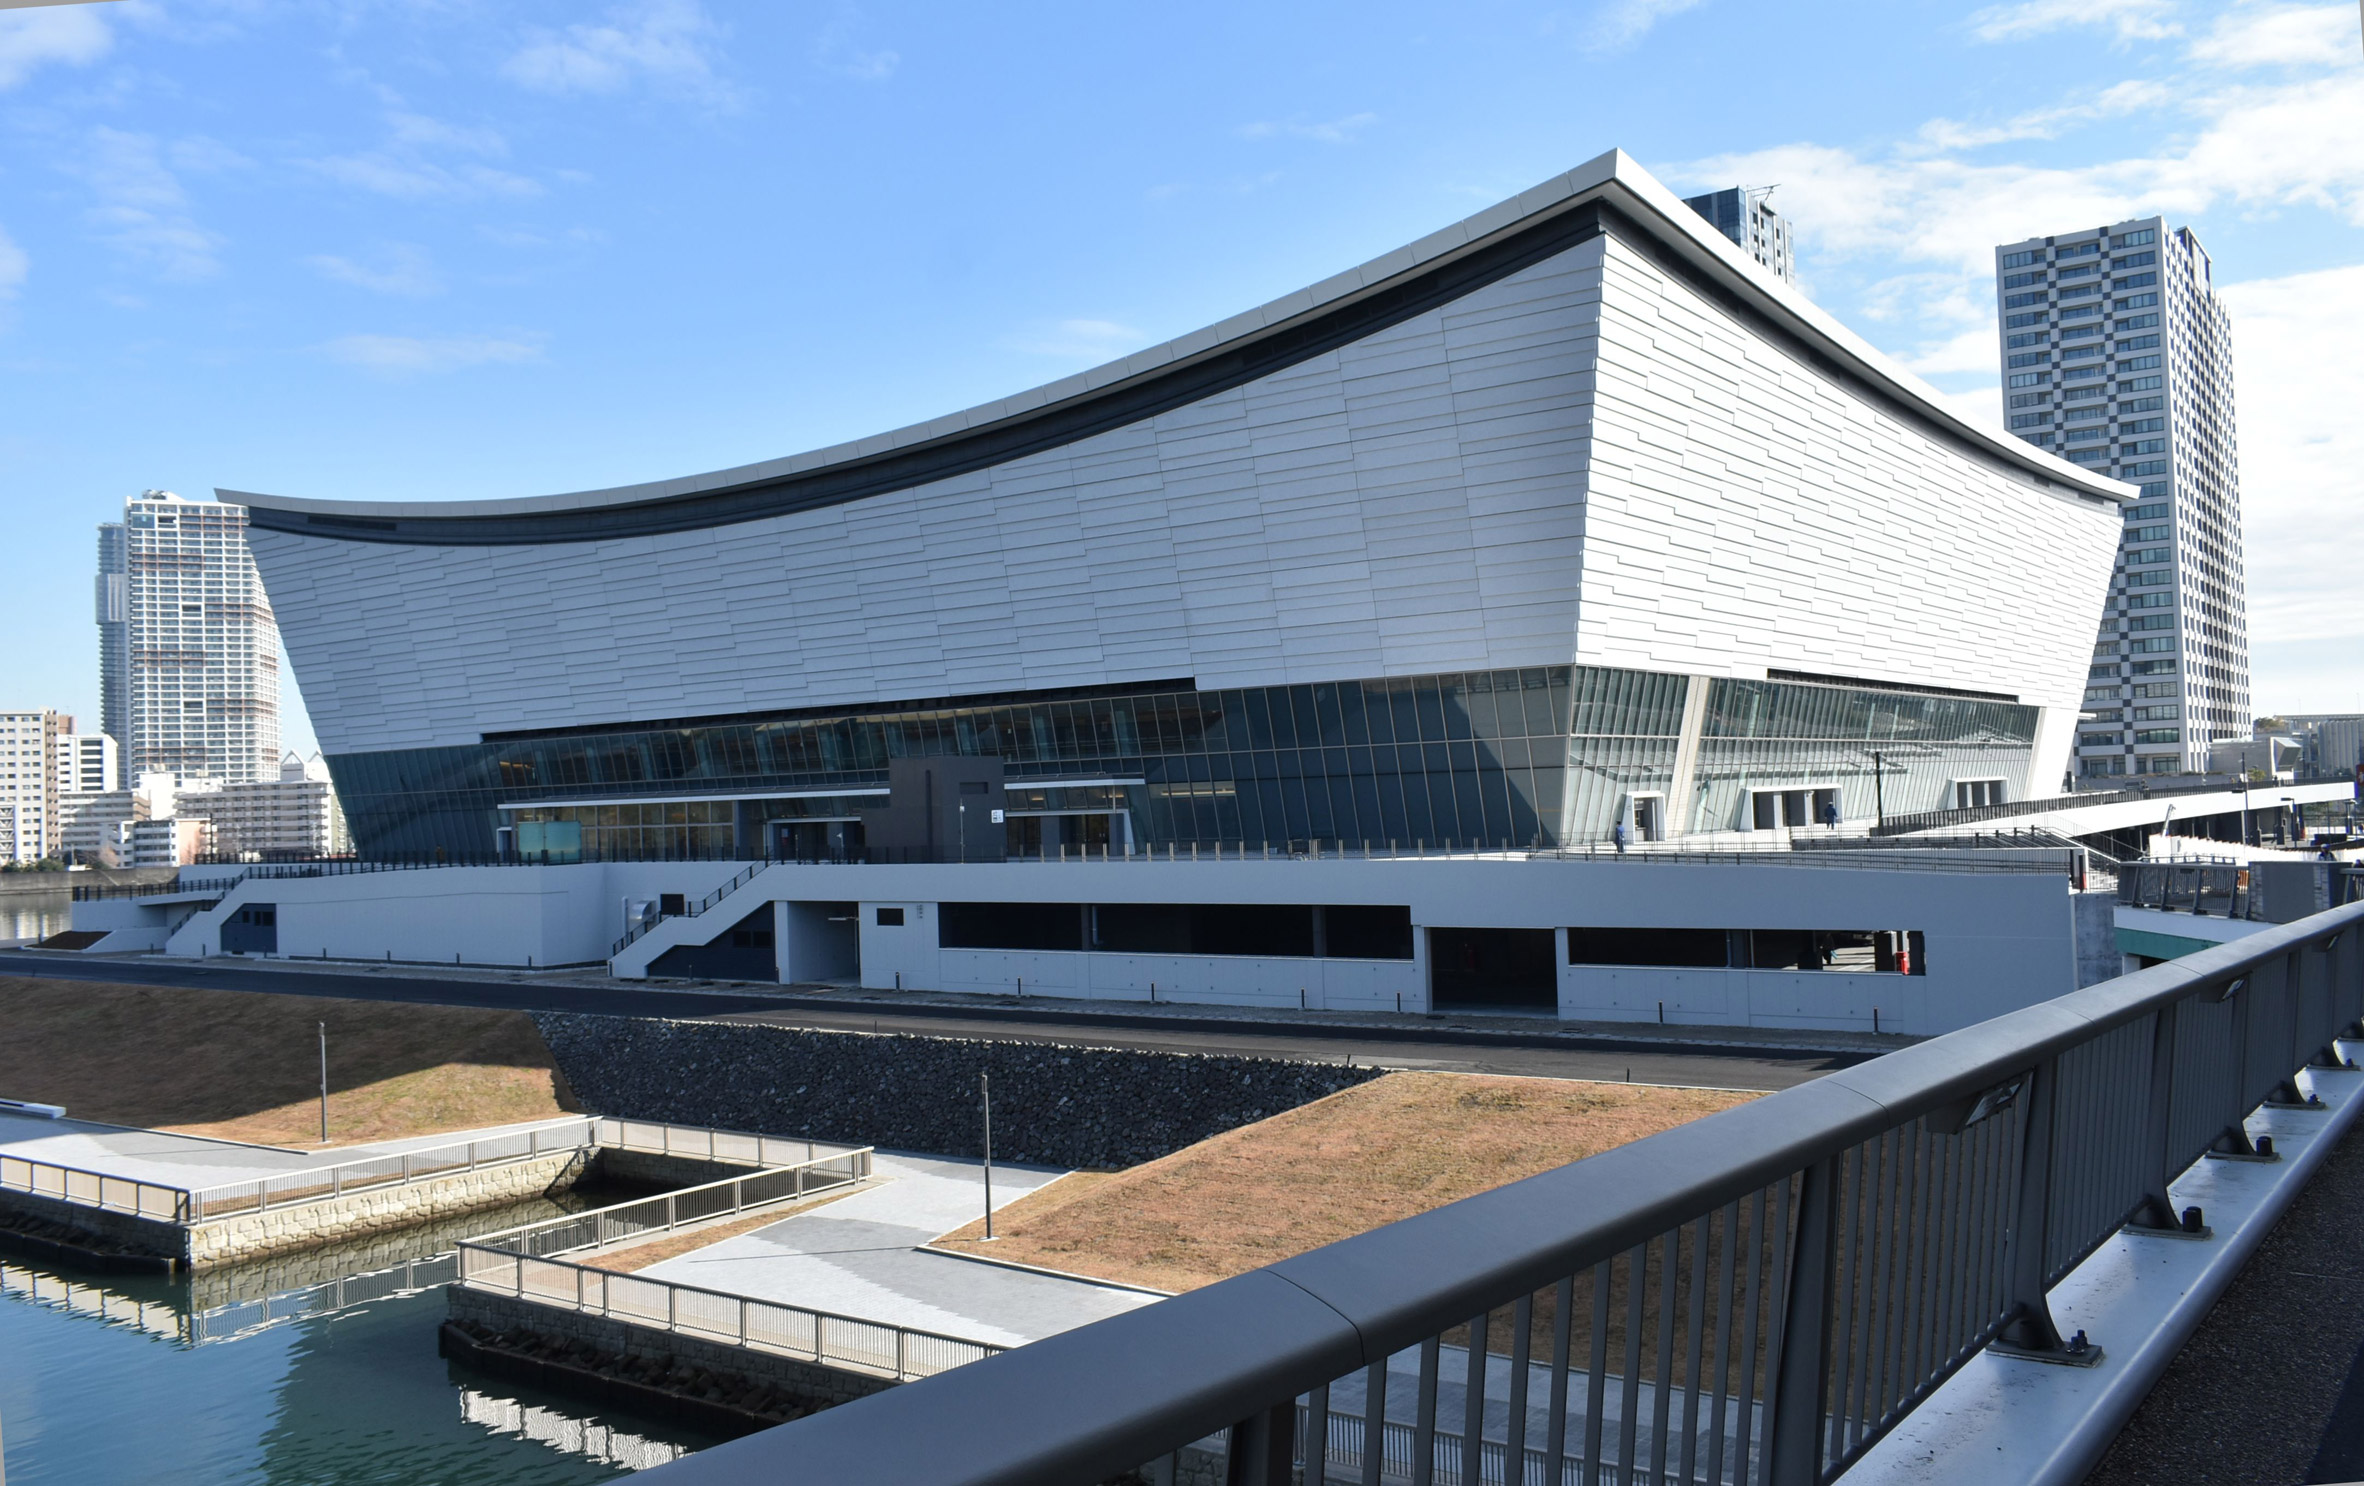 Ariake Arena, is one of the Tokyo 2020 Olympics Stadium in Tokyo